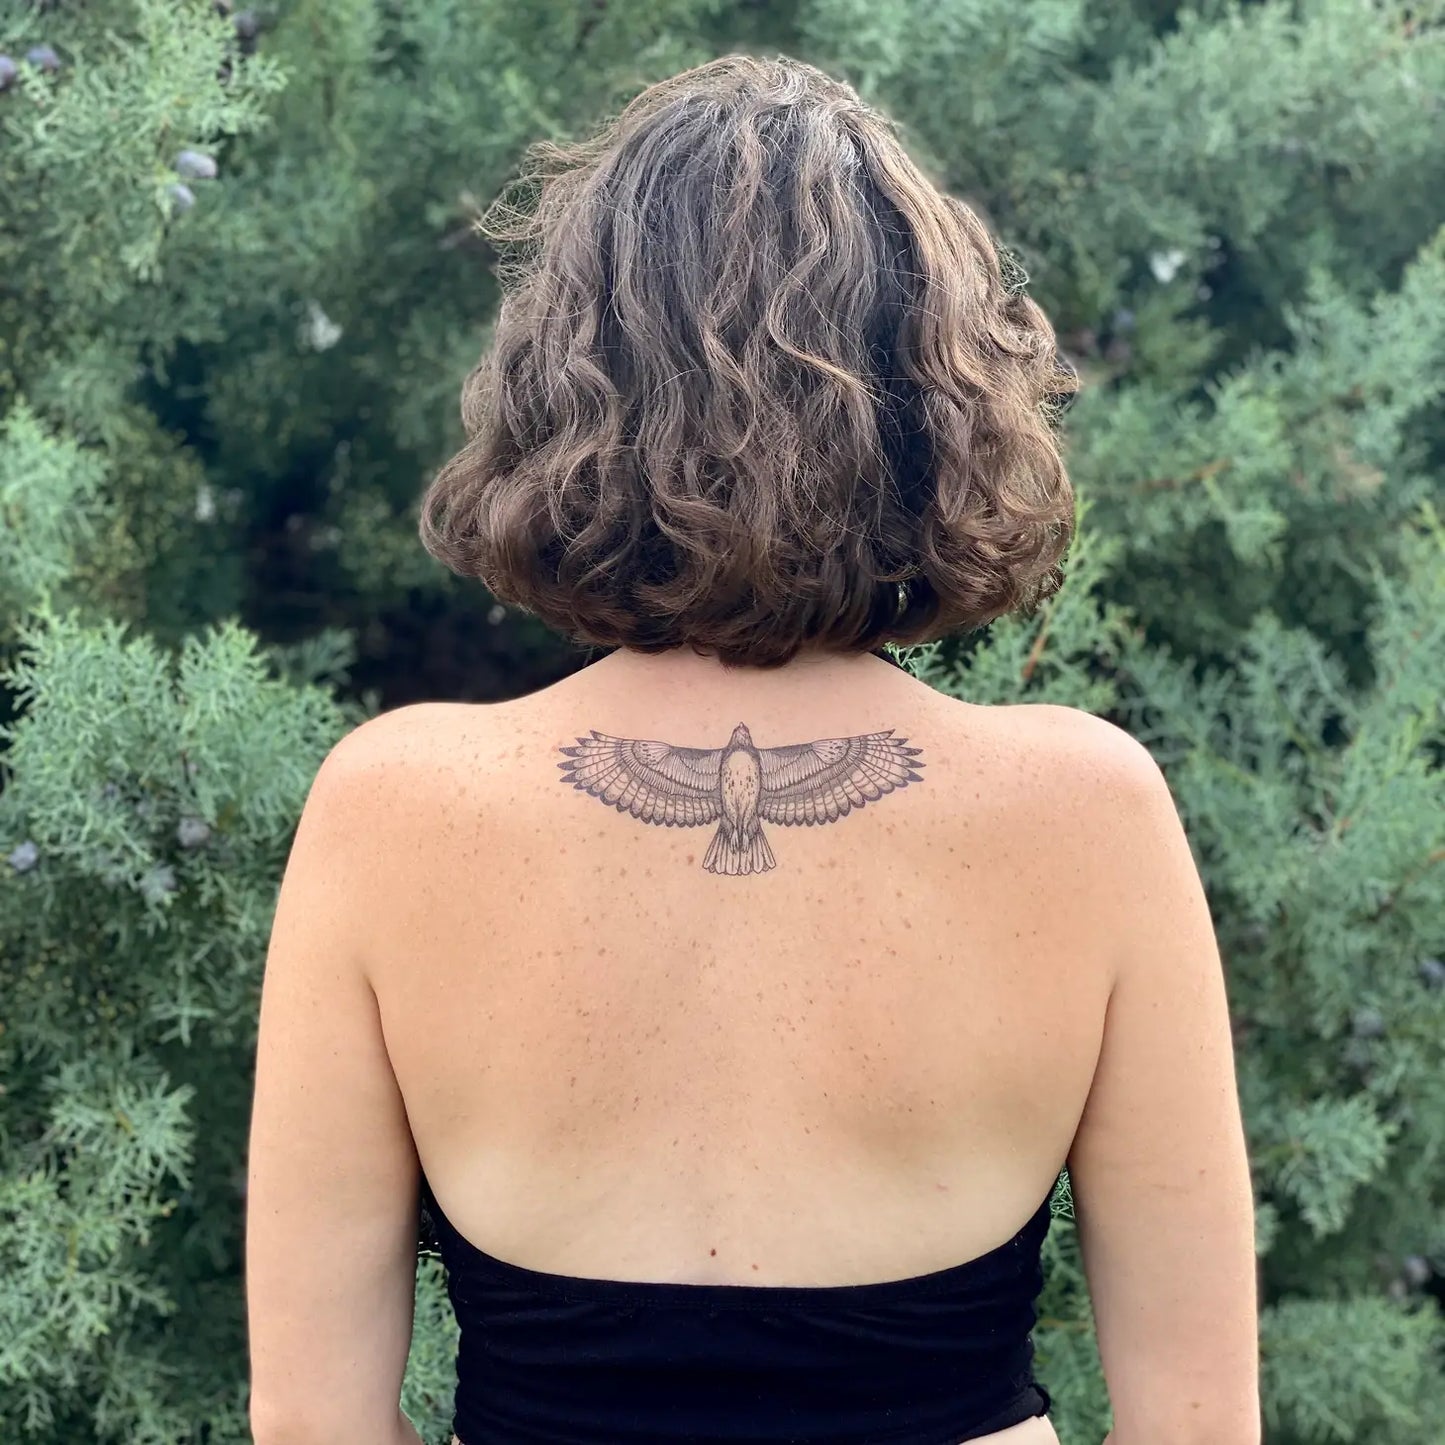 Hawk Temporary Tattoos